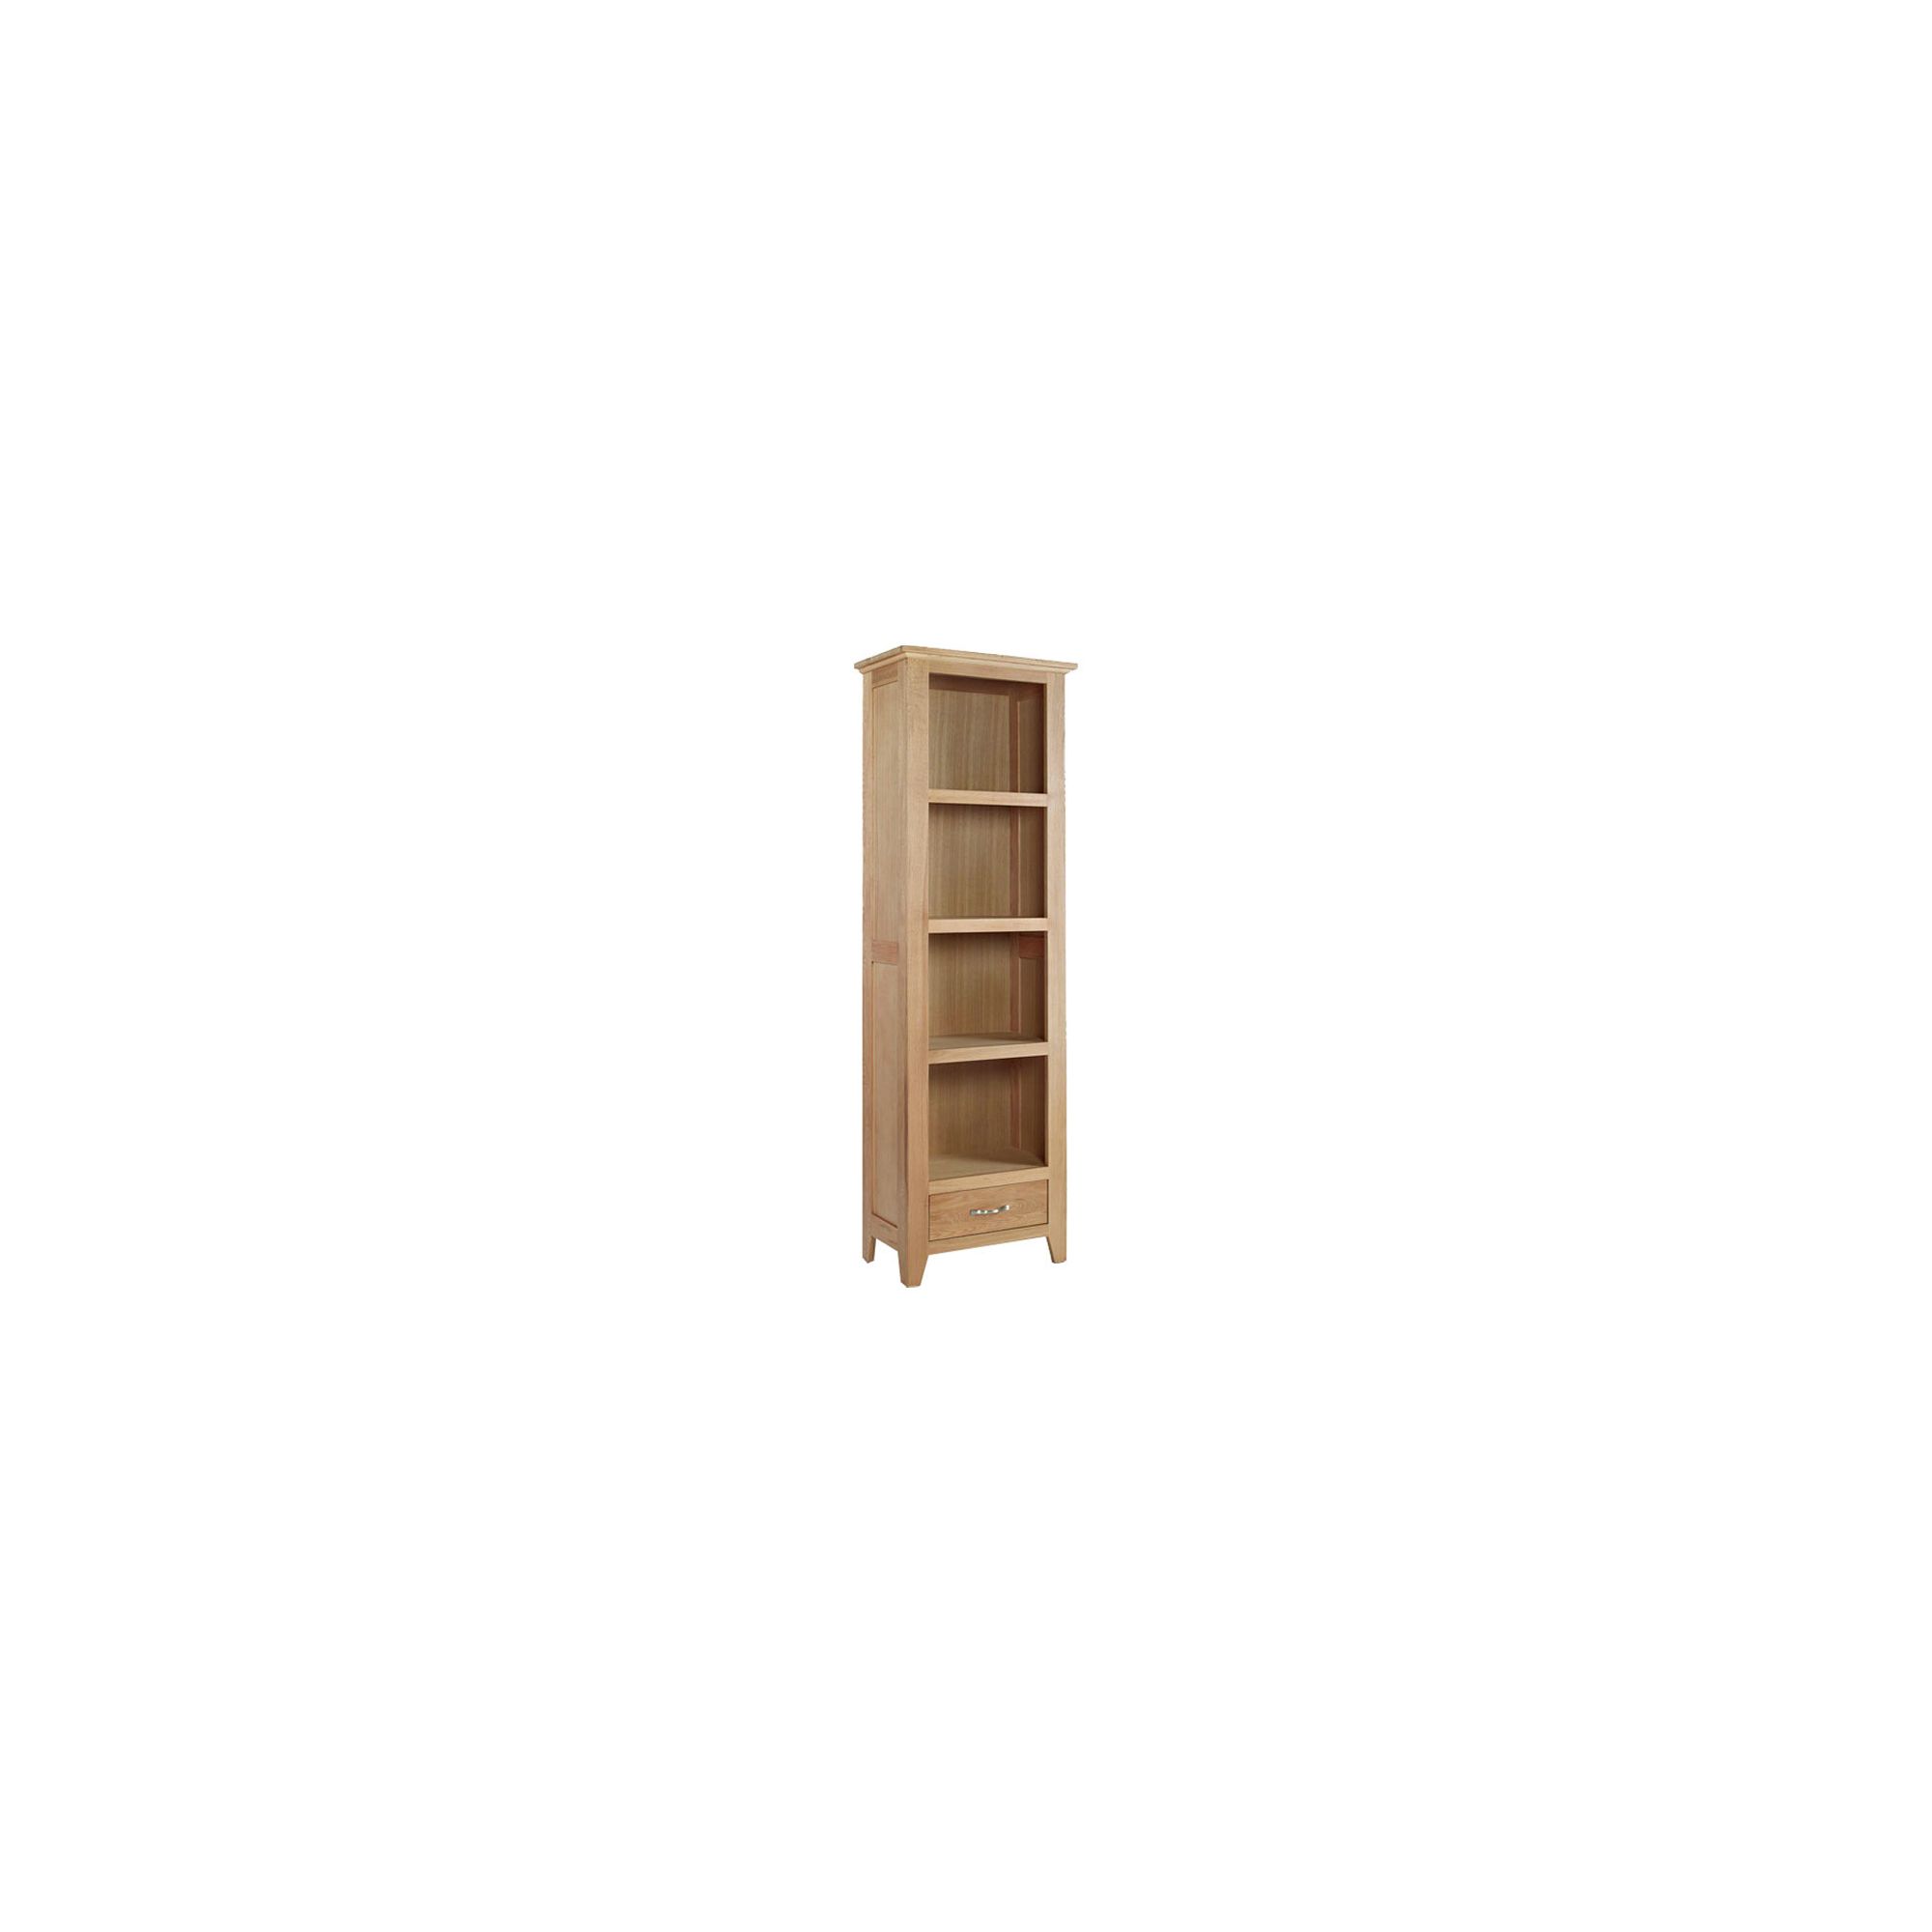 Ametis Sherwood Oak Bookcase - 62cm at Tesco Direct